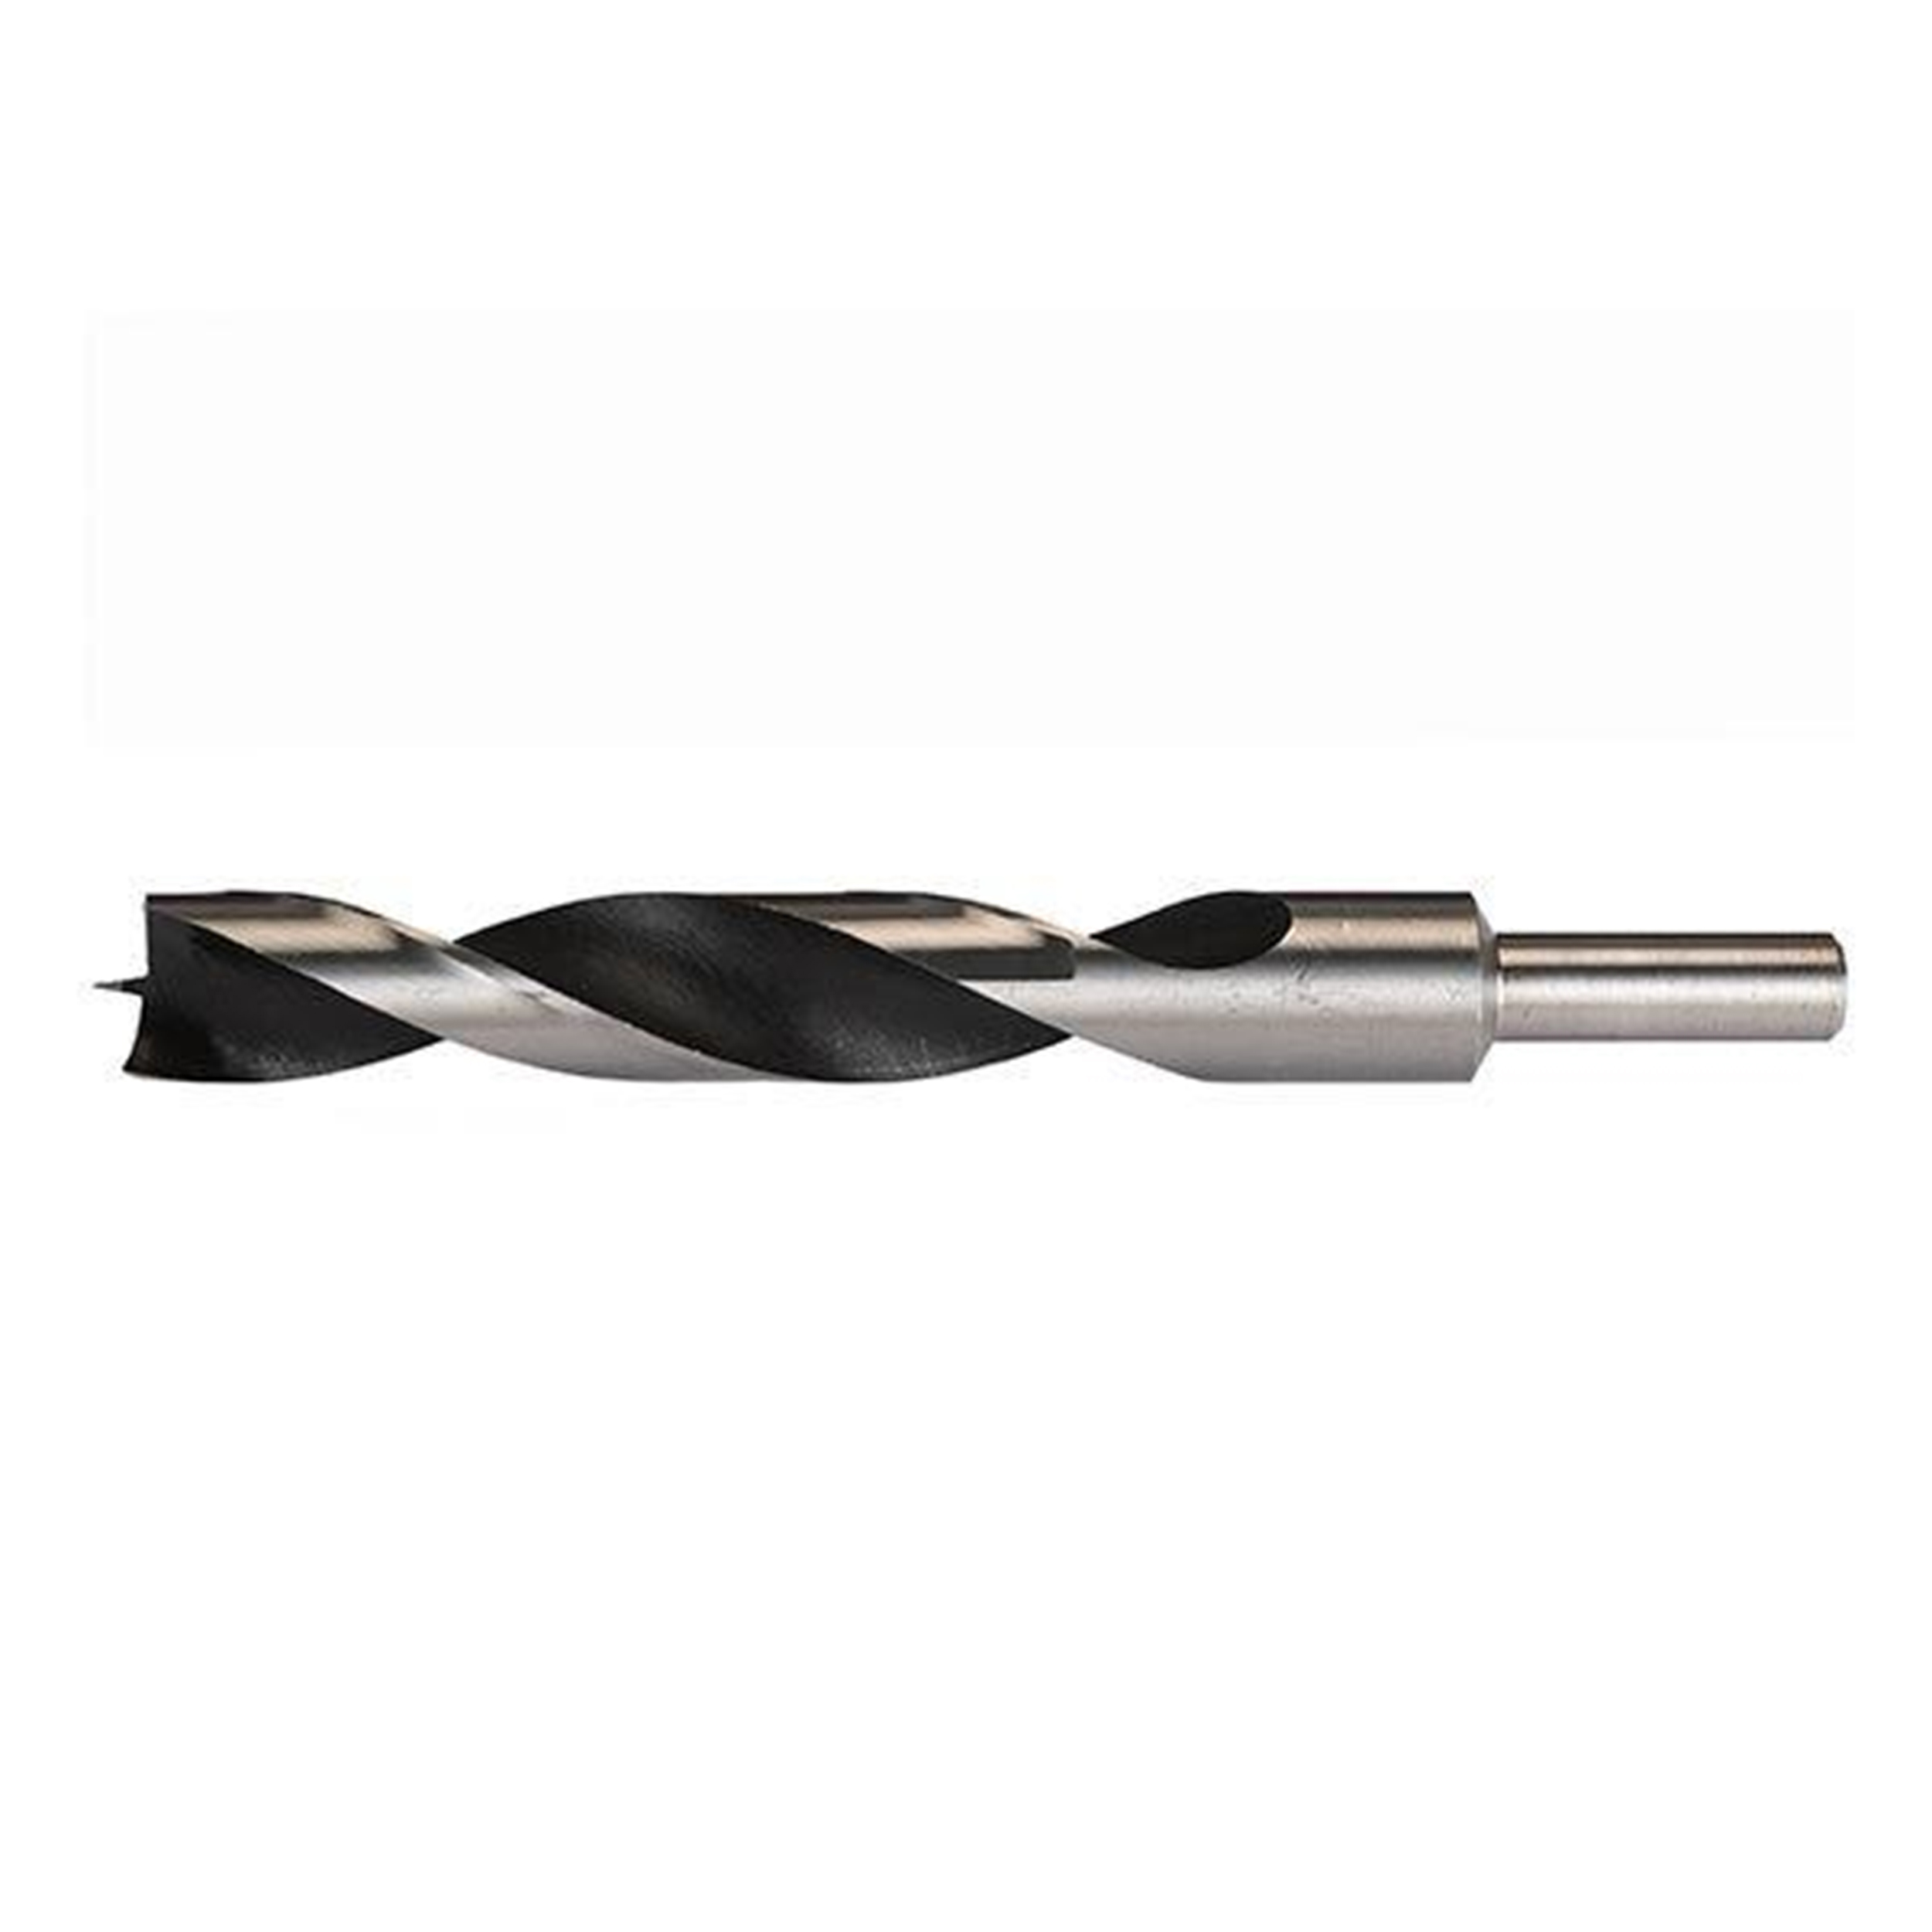 1-inch Chrome-vanadium Steel Brad Point Drill Bit